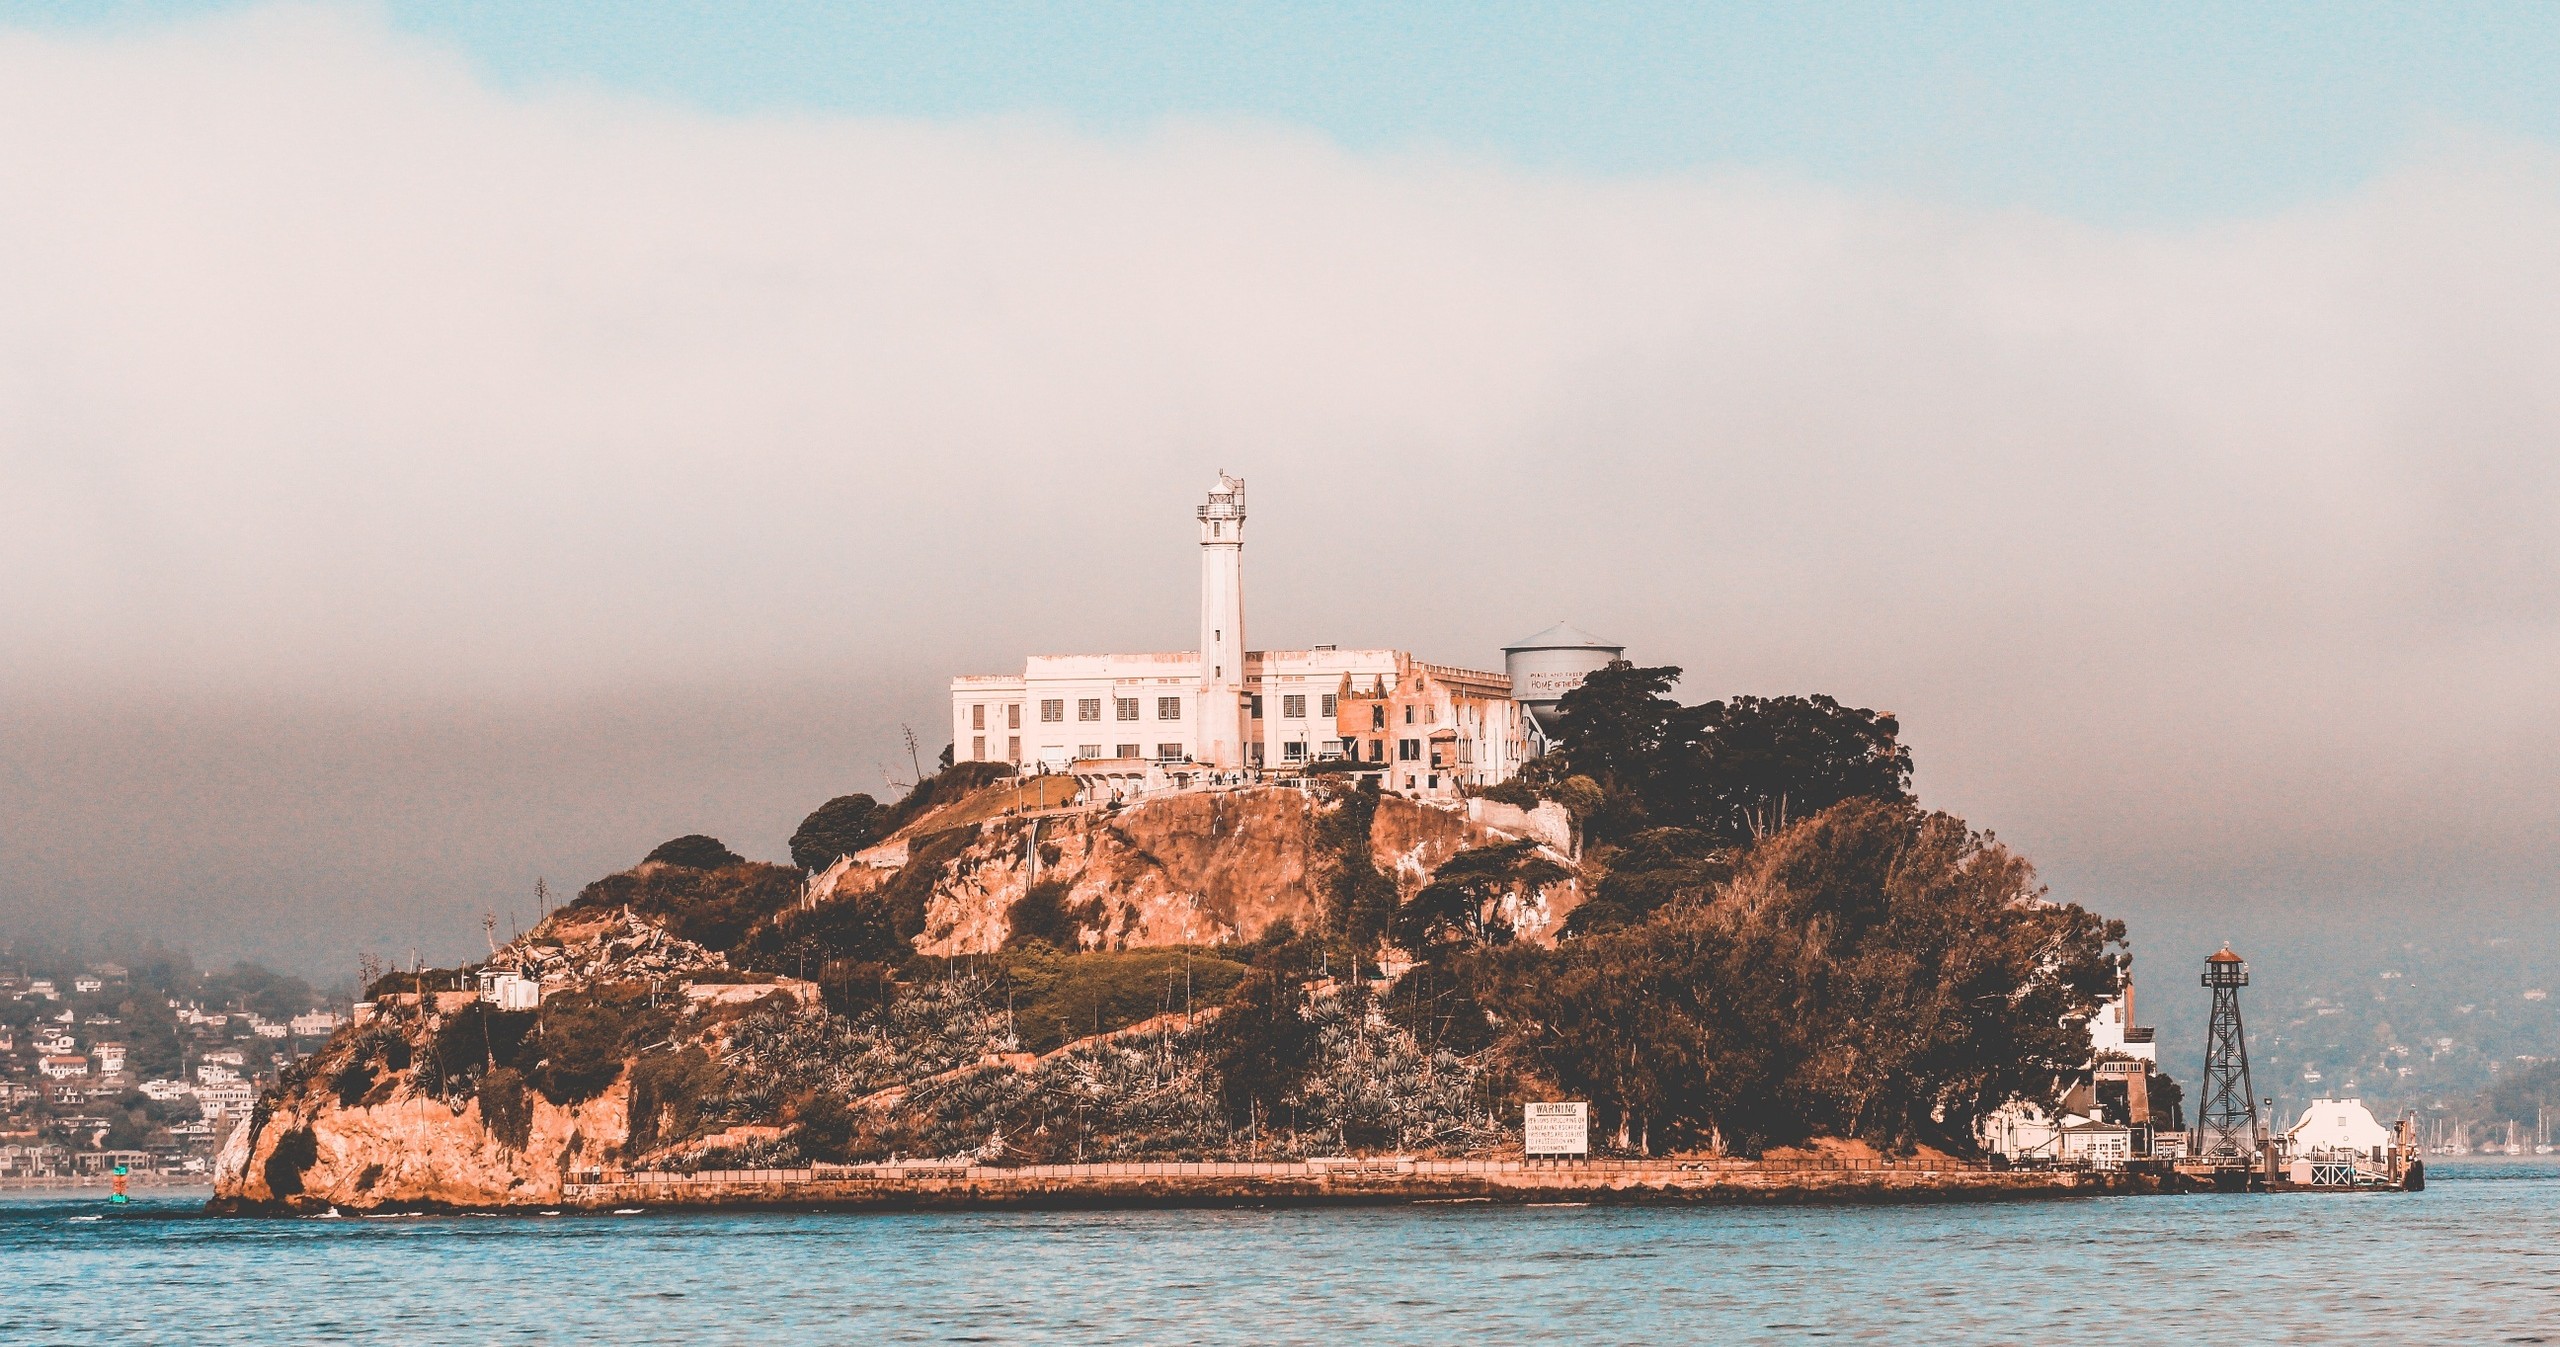 Ferry to Alcatraz and Golden Gate Bridge in San Francisco